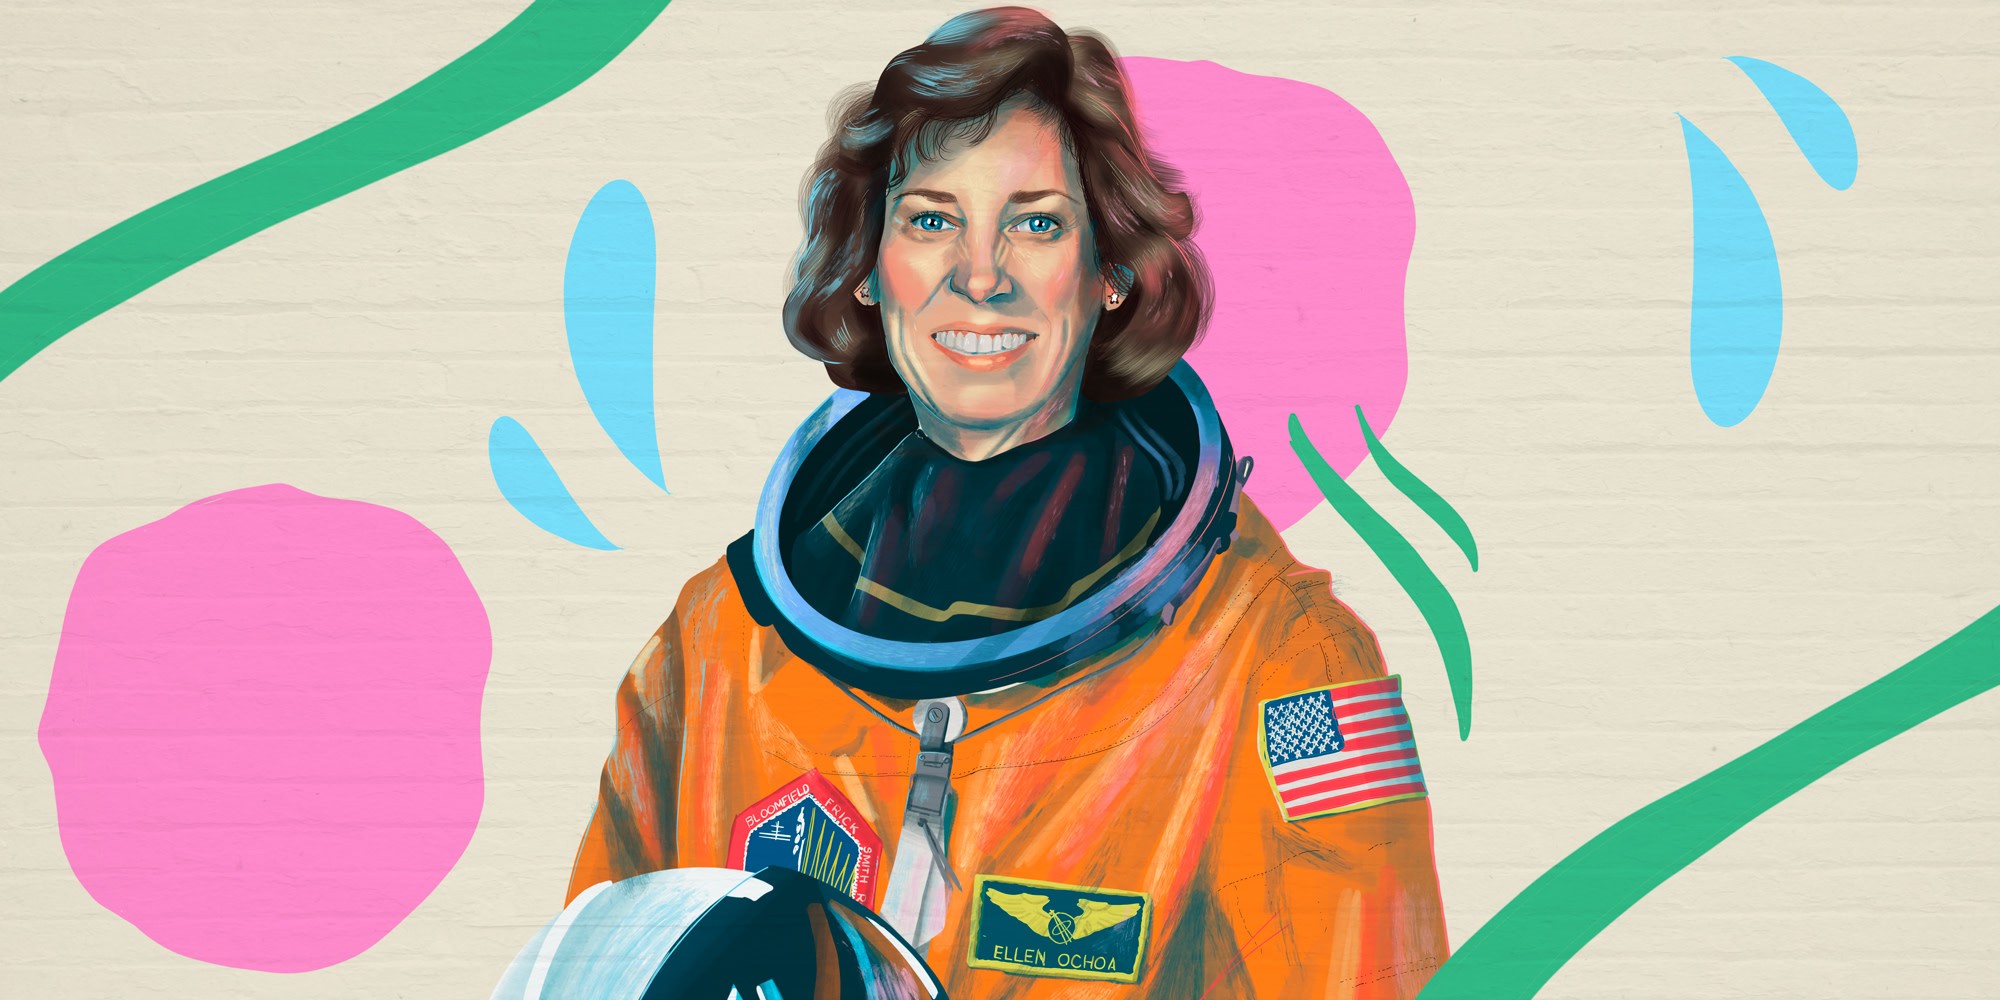 Meet Dr. Ellen Ochoa, the first Hispanic woman to go into space